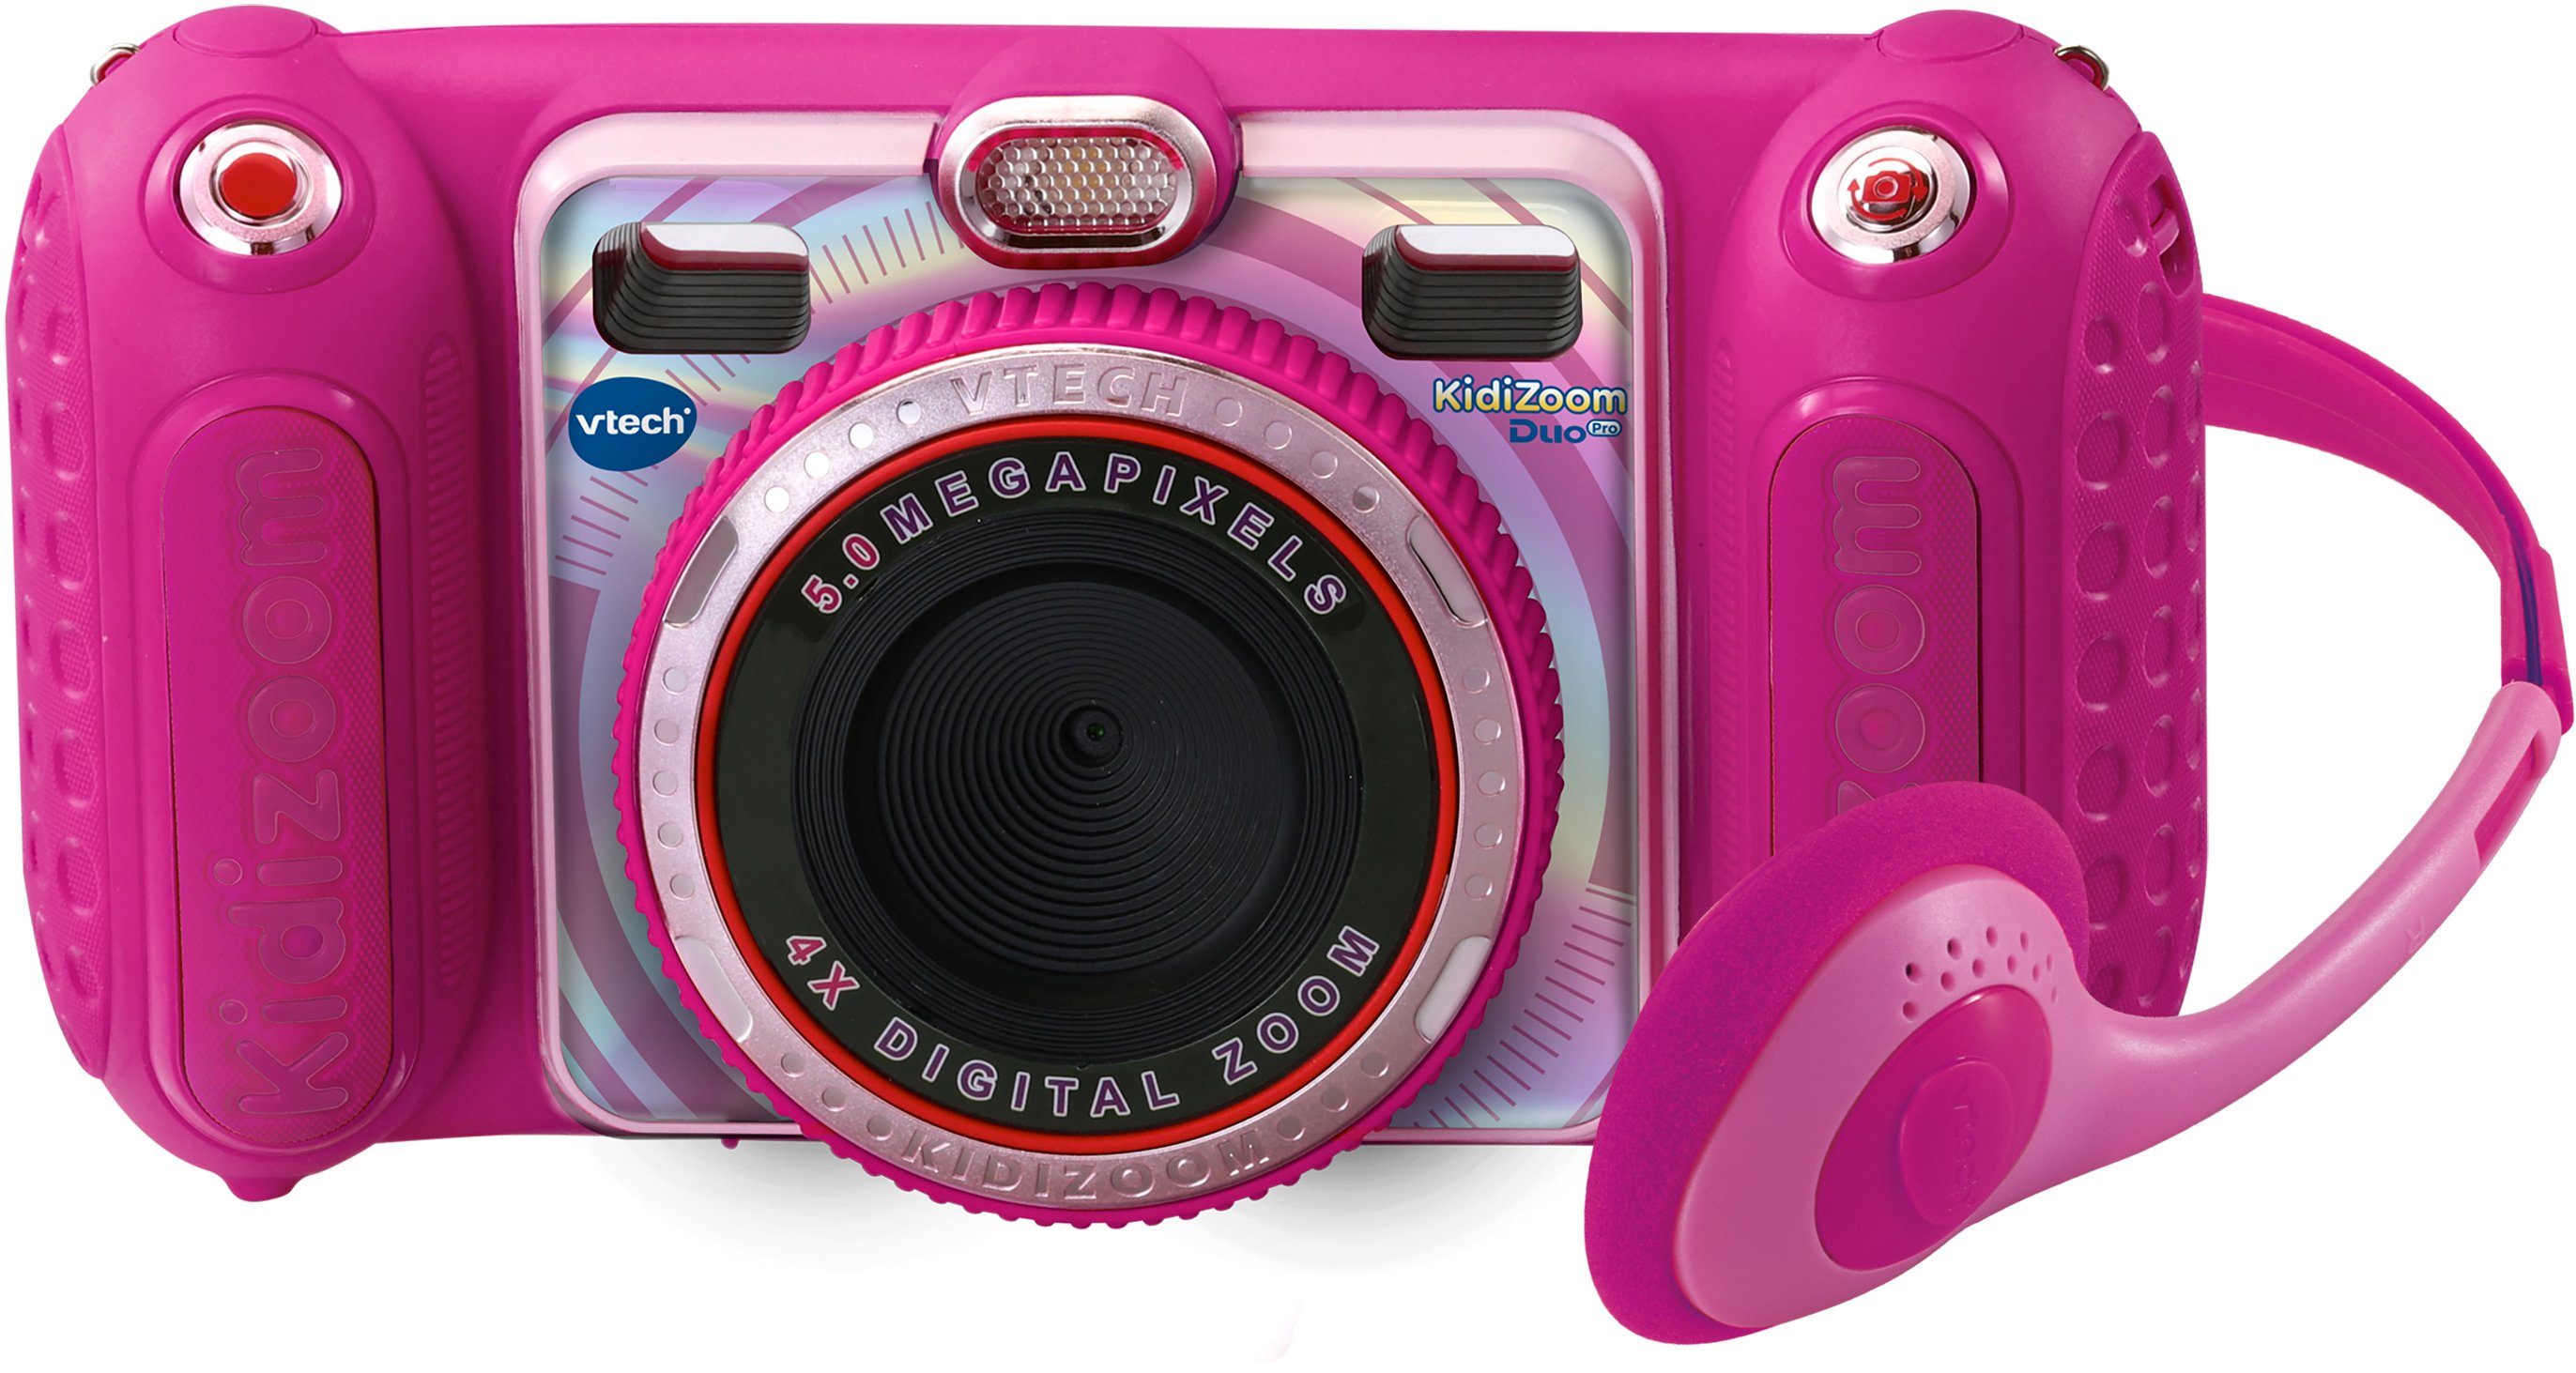 Vtech® KidiZoom Duo Pro Kinderkamera (inkluisve Kopfhörer) pink